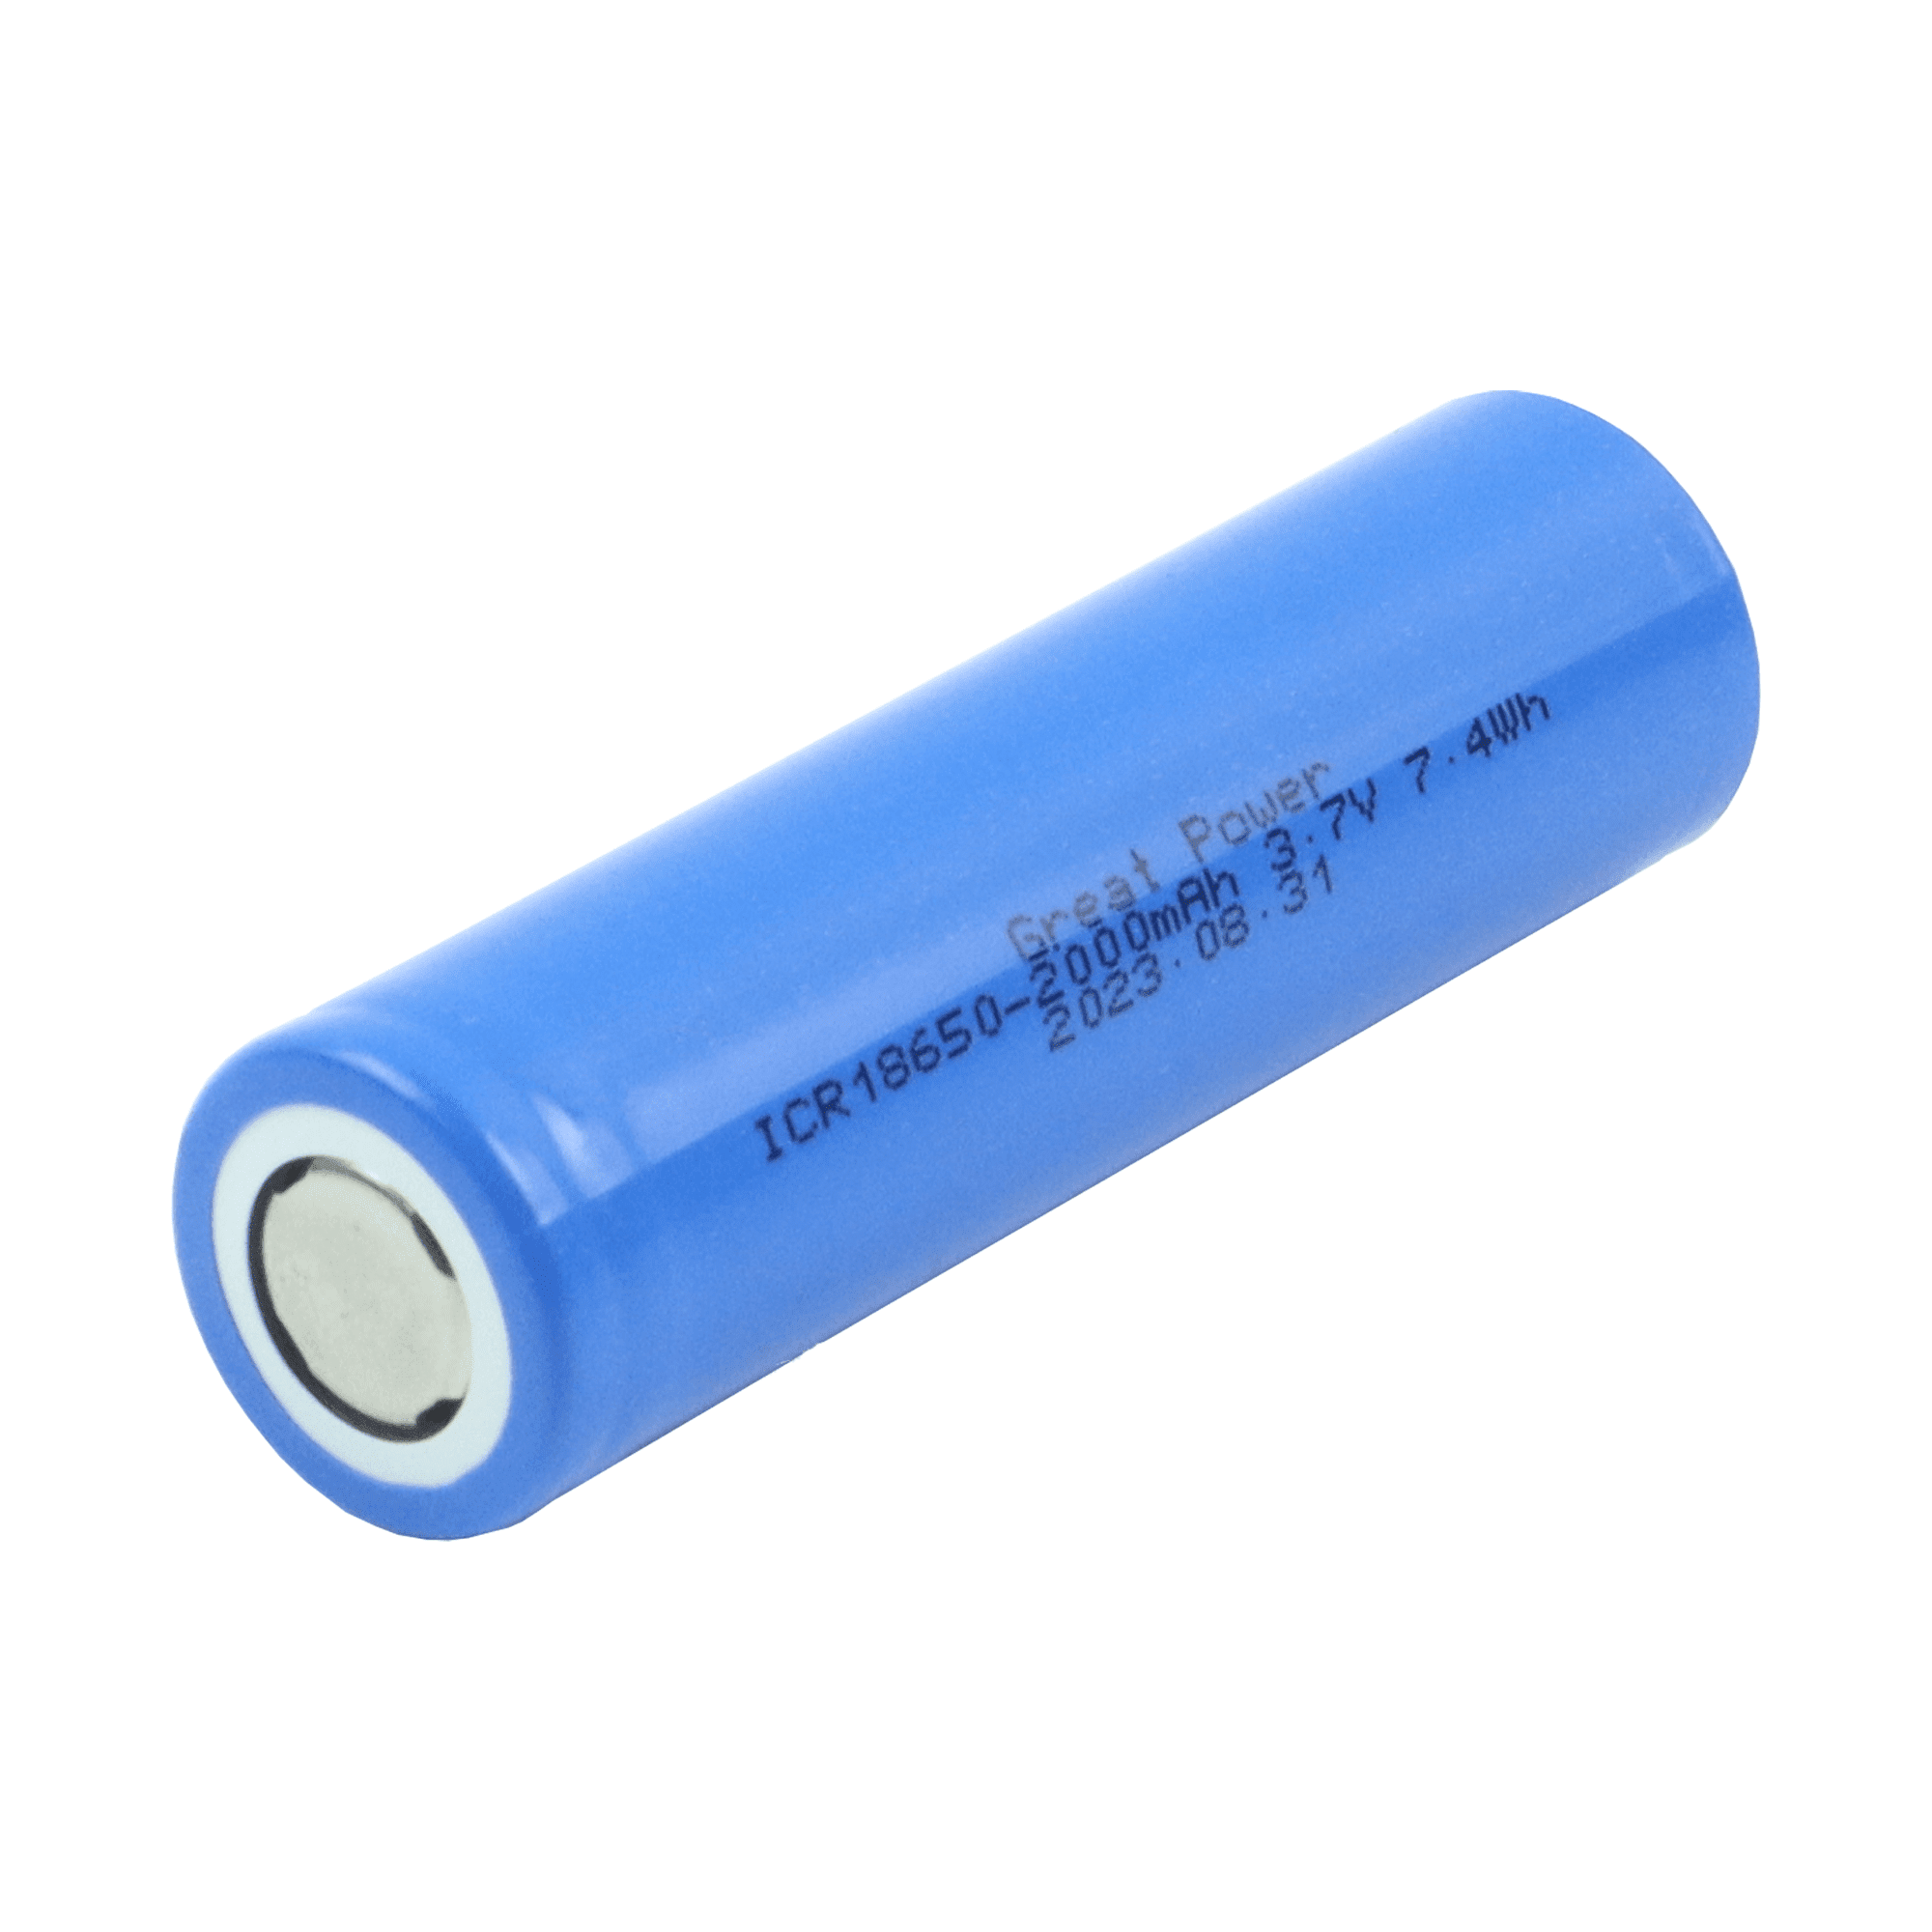 Lithium Battery ICR18650 2000mAh 3.7V